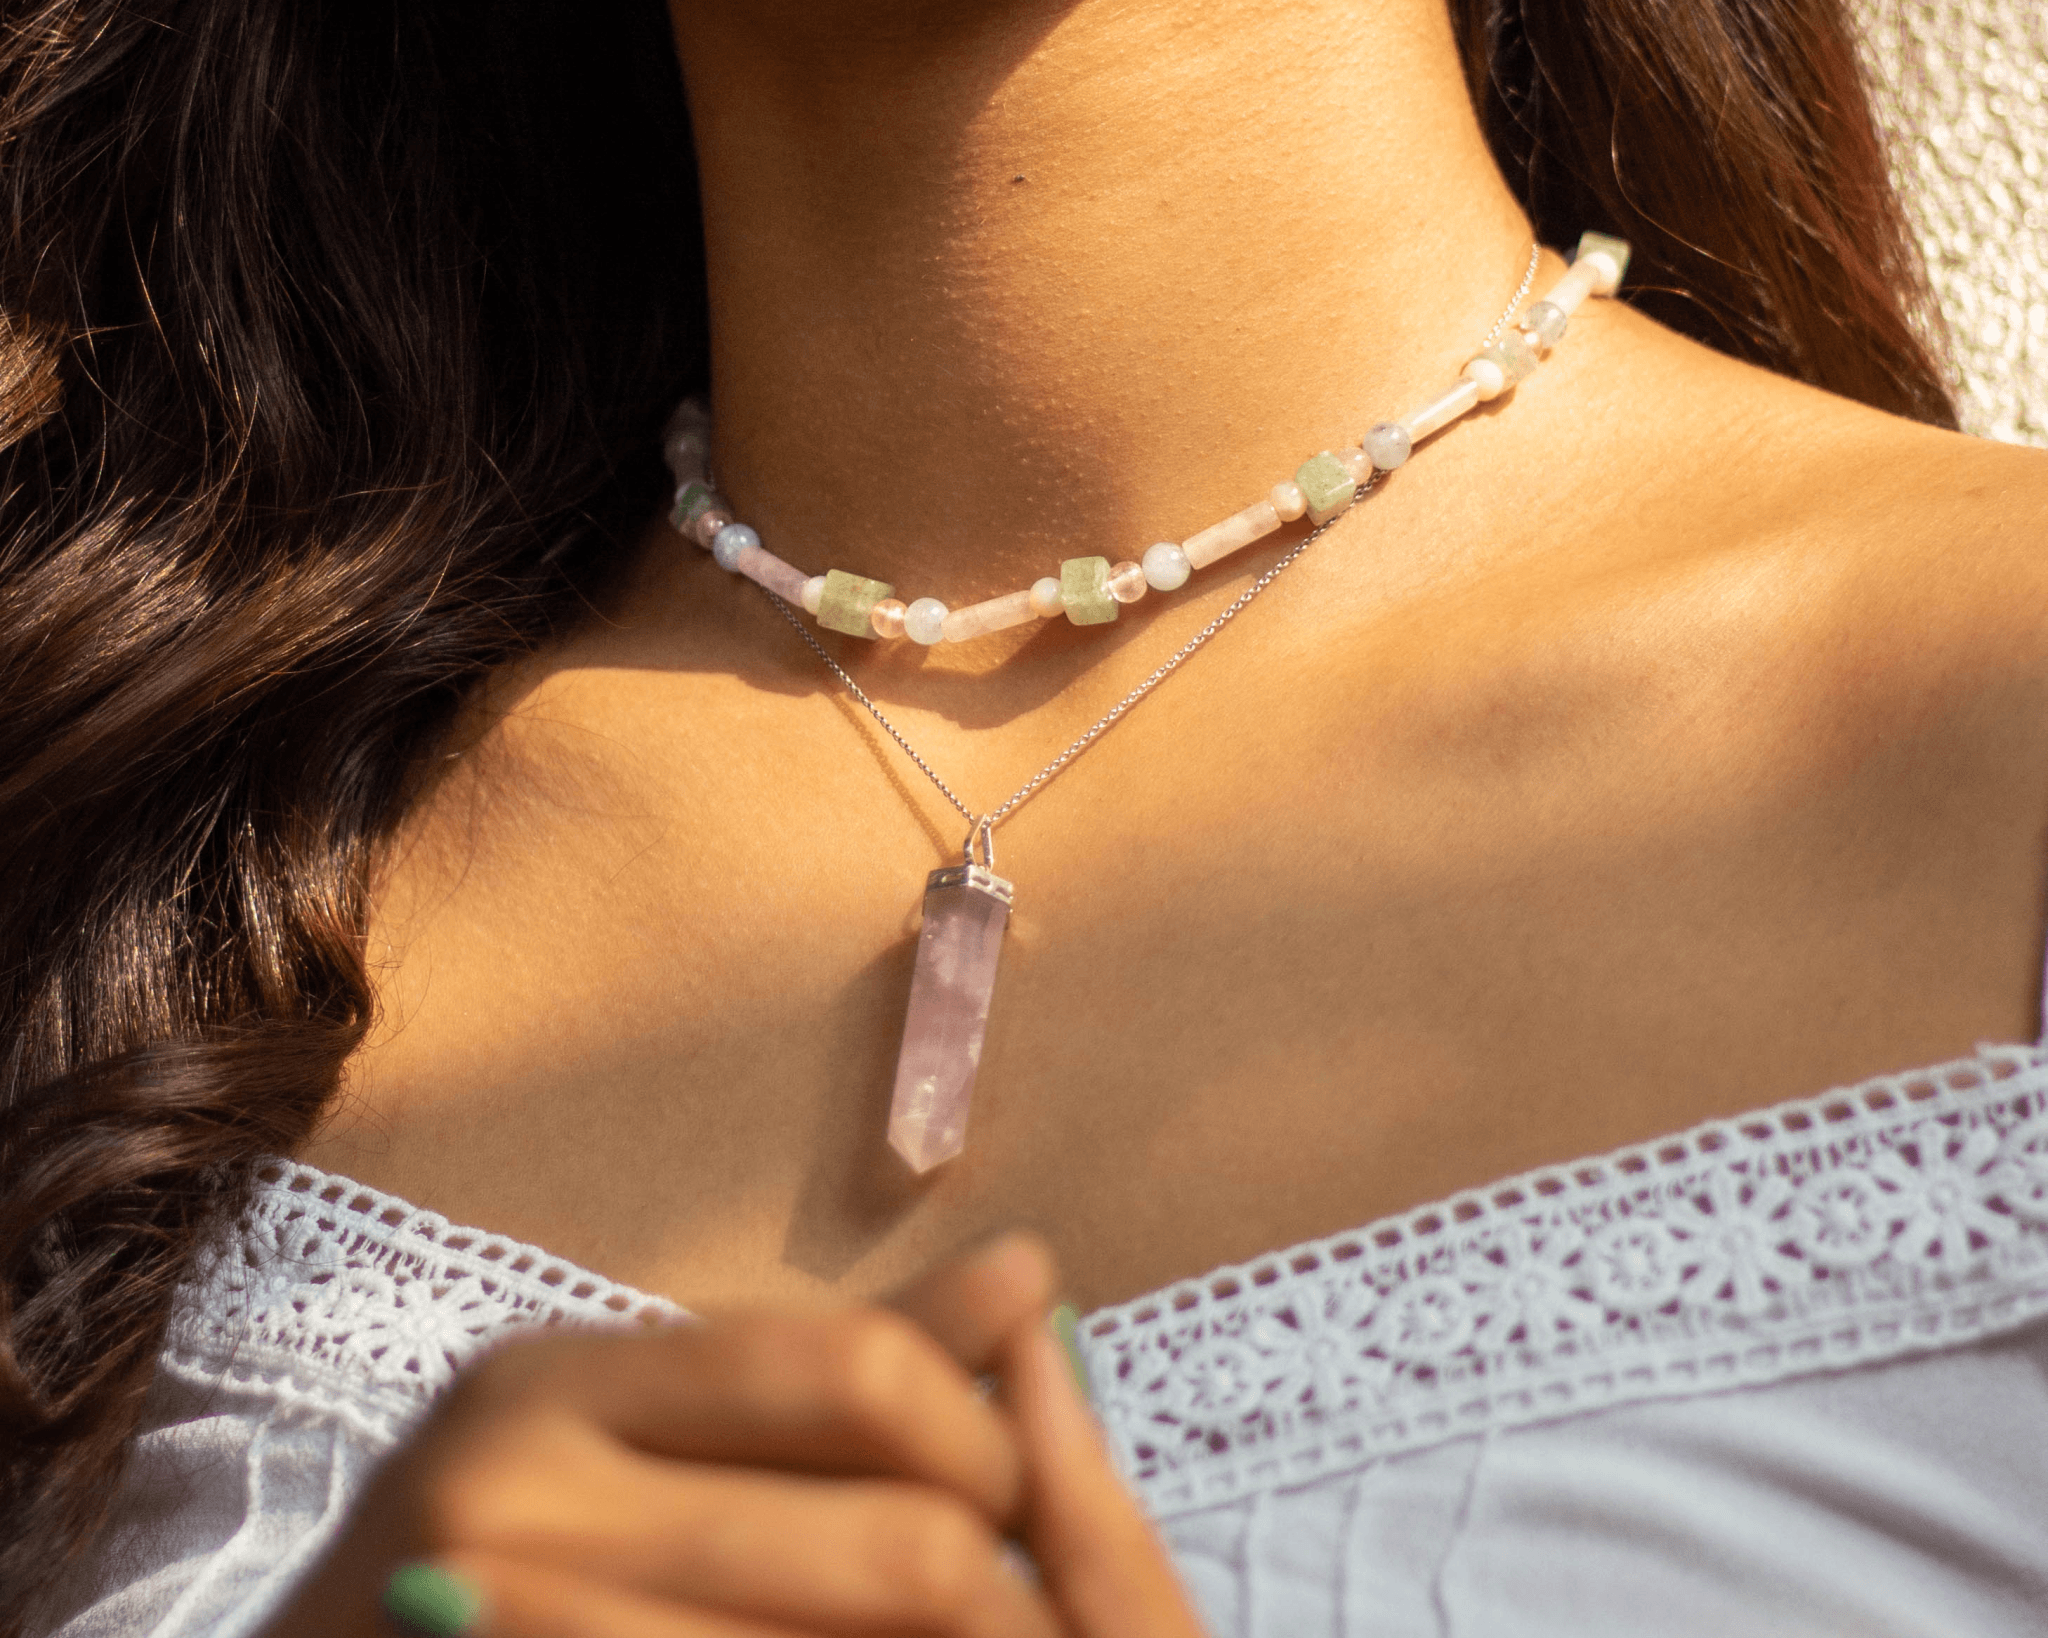 QDDJGYP Jewelry Rose Quartz Crystal Necklace, Peach Powder Crystal India |  Ubuy